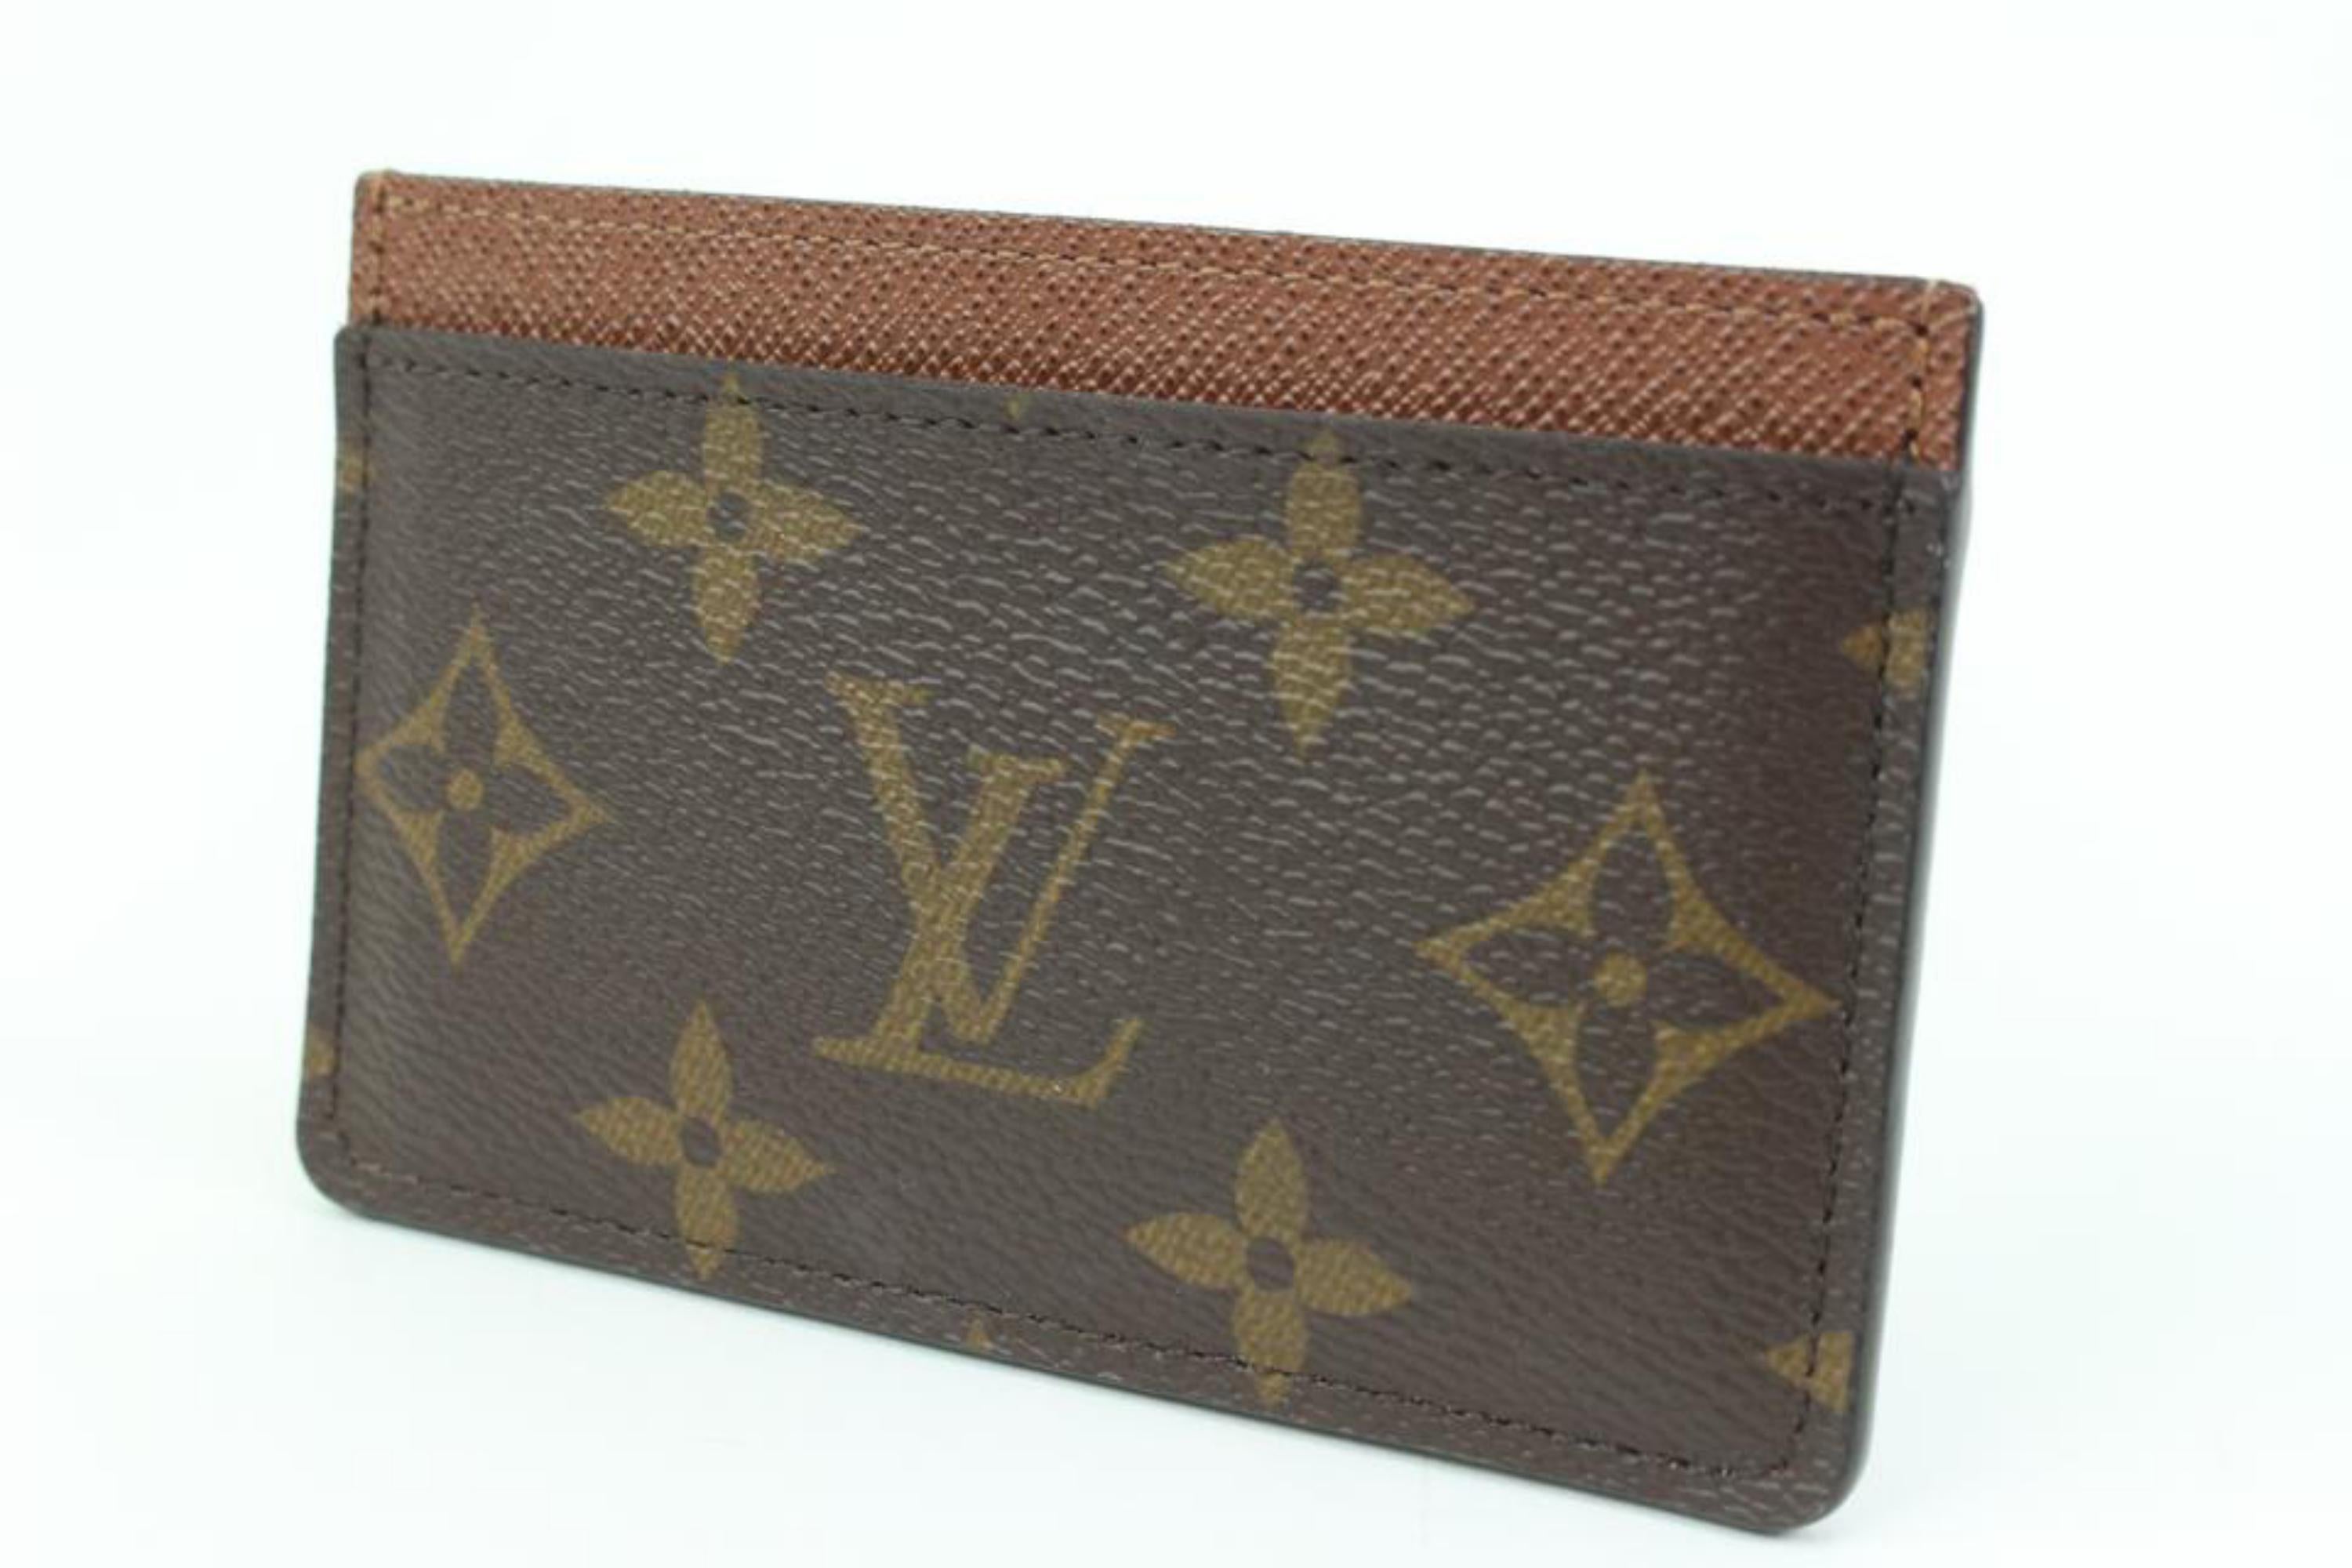 Louis Vuitton Monogram Porte Cartes Card Holder Wallet Case 53lk322s
Date Code/Serial Number: CA0290
Made In: Spain
Measurements: Length:  4.3